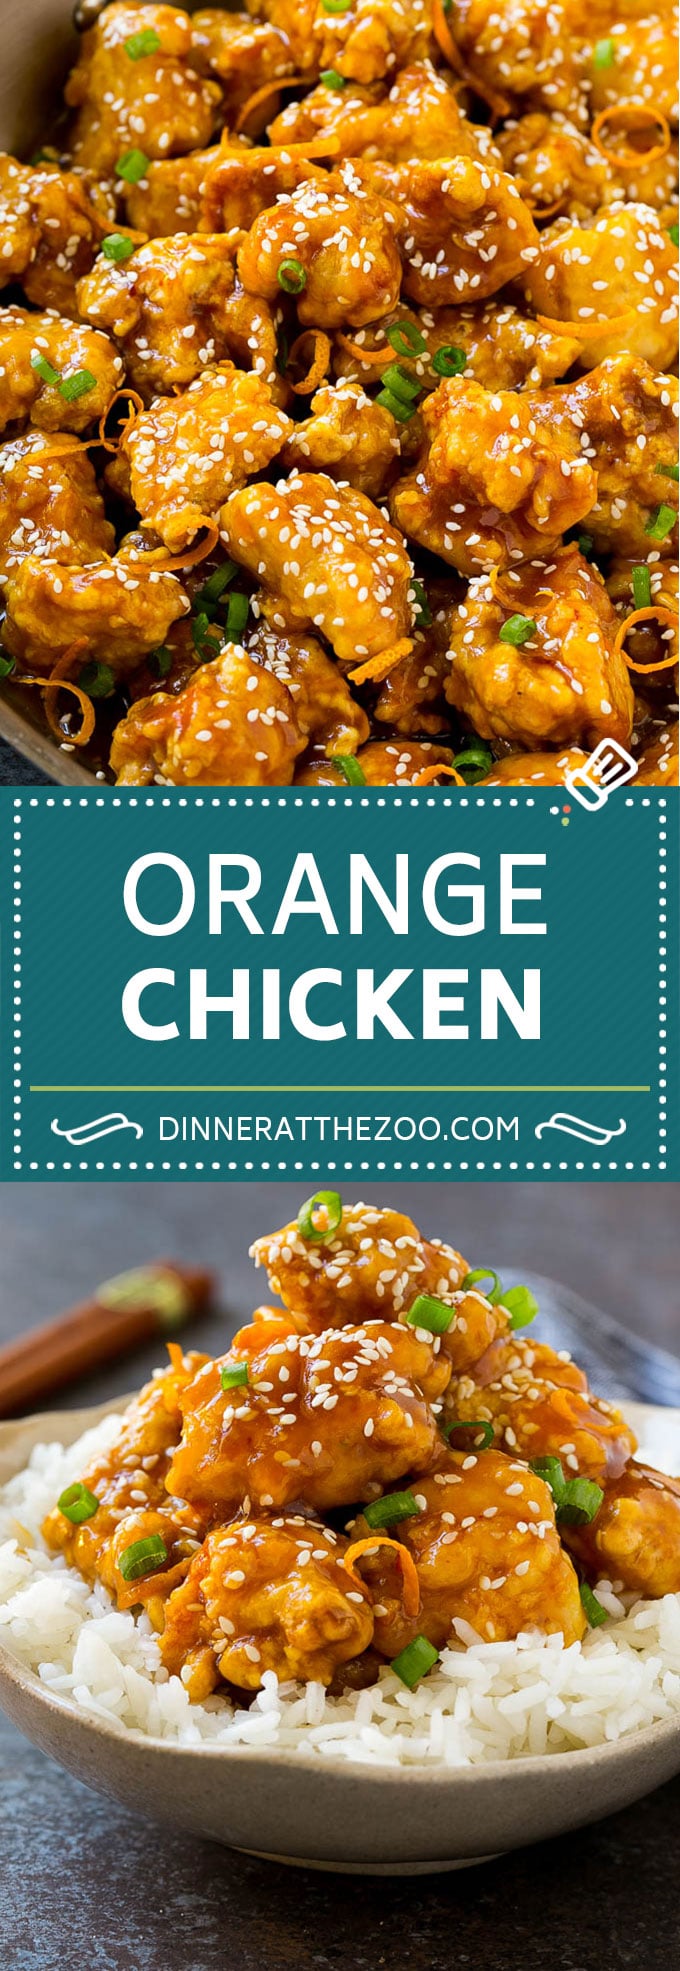 Receta de pollo a la naranja |  Pollo chino a la naranja |  Panda Express Orange Chicken #orancia #pollo #tokeout #comida china #dinner #dinneratthezoo